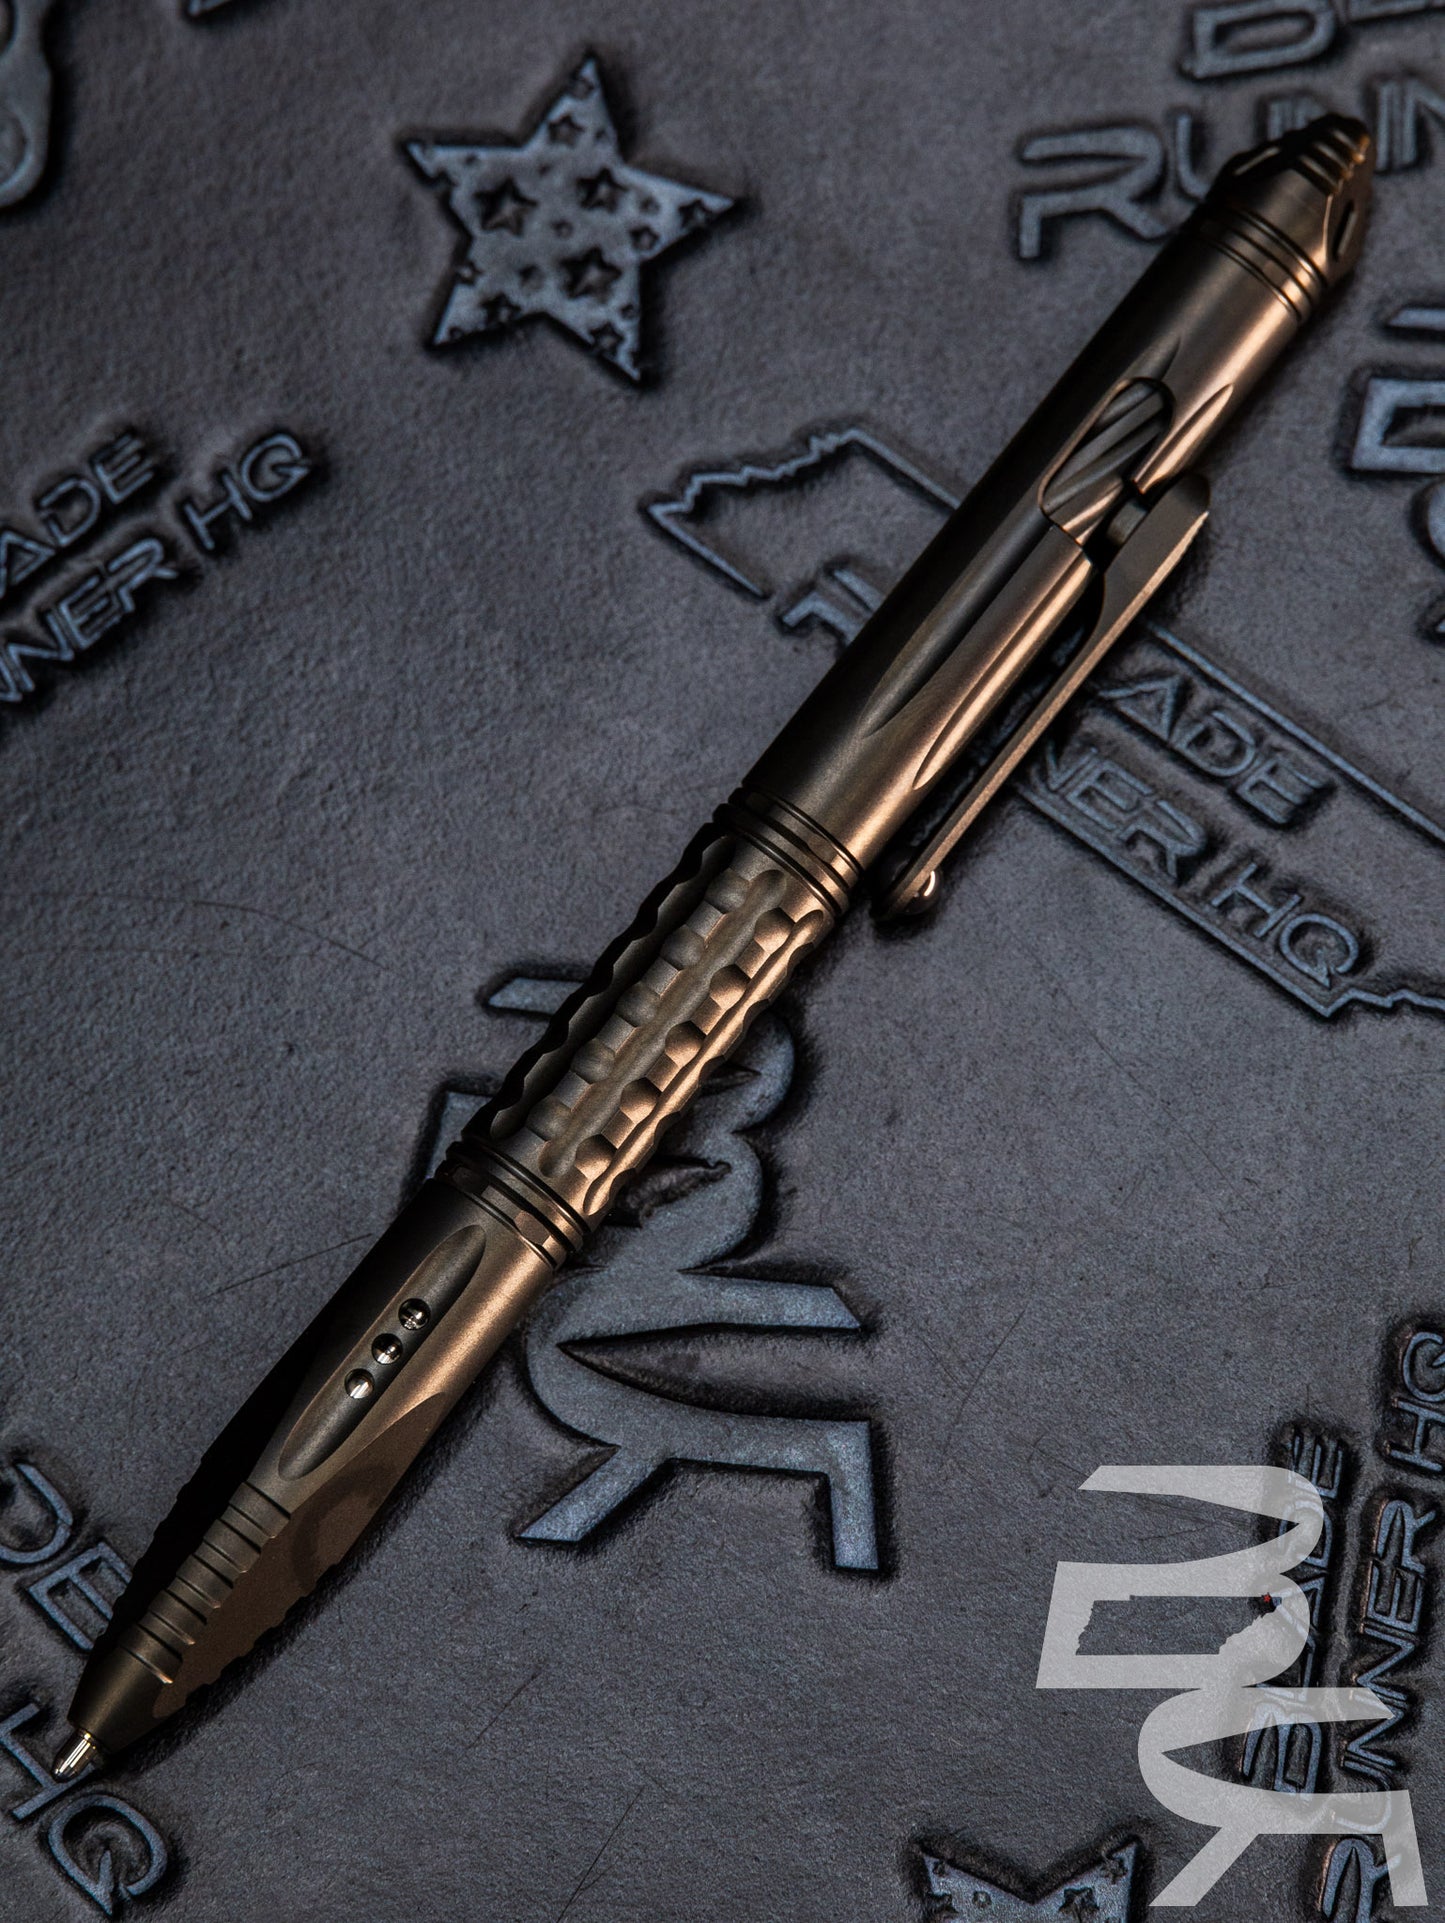 Microtech Kyroh Standard Black DLC Bolt-Action Titanium Pen with Pocket Clip, 5.875" Overall, Tritium Cap Insert - 403-TI-DLCTRI